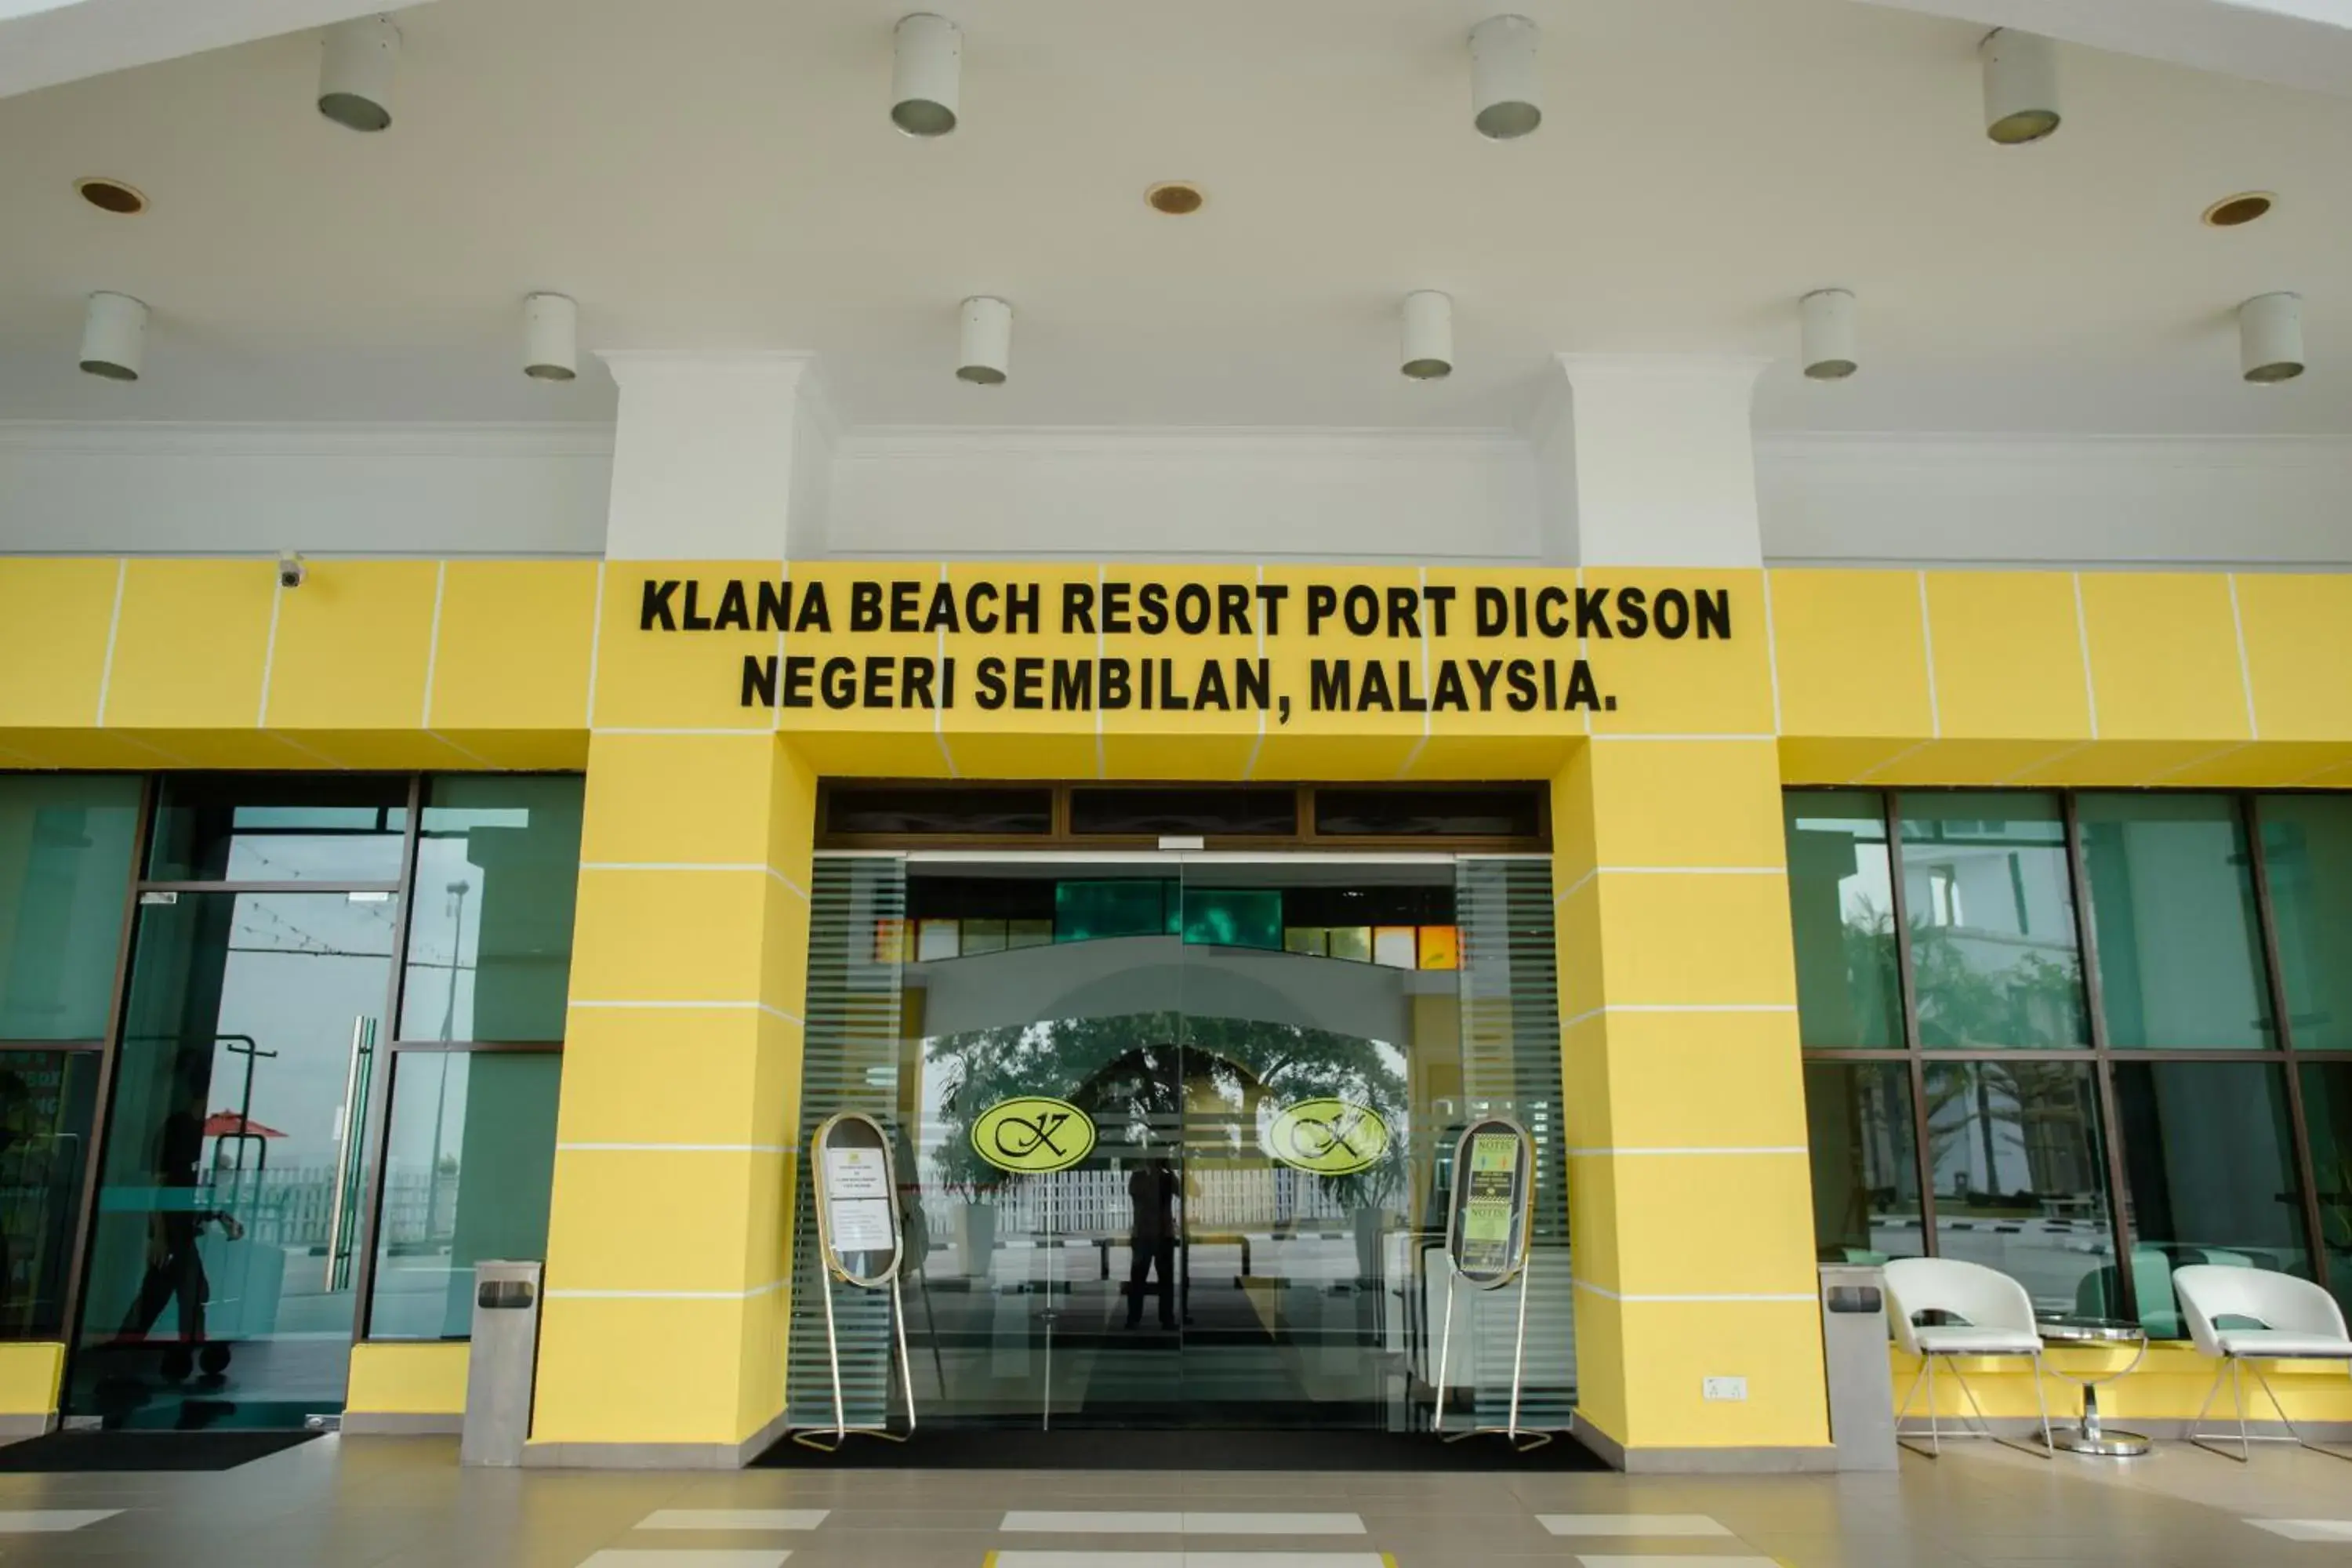 Klana Beach Resort Port Dickson